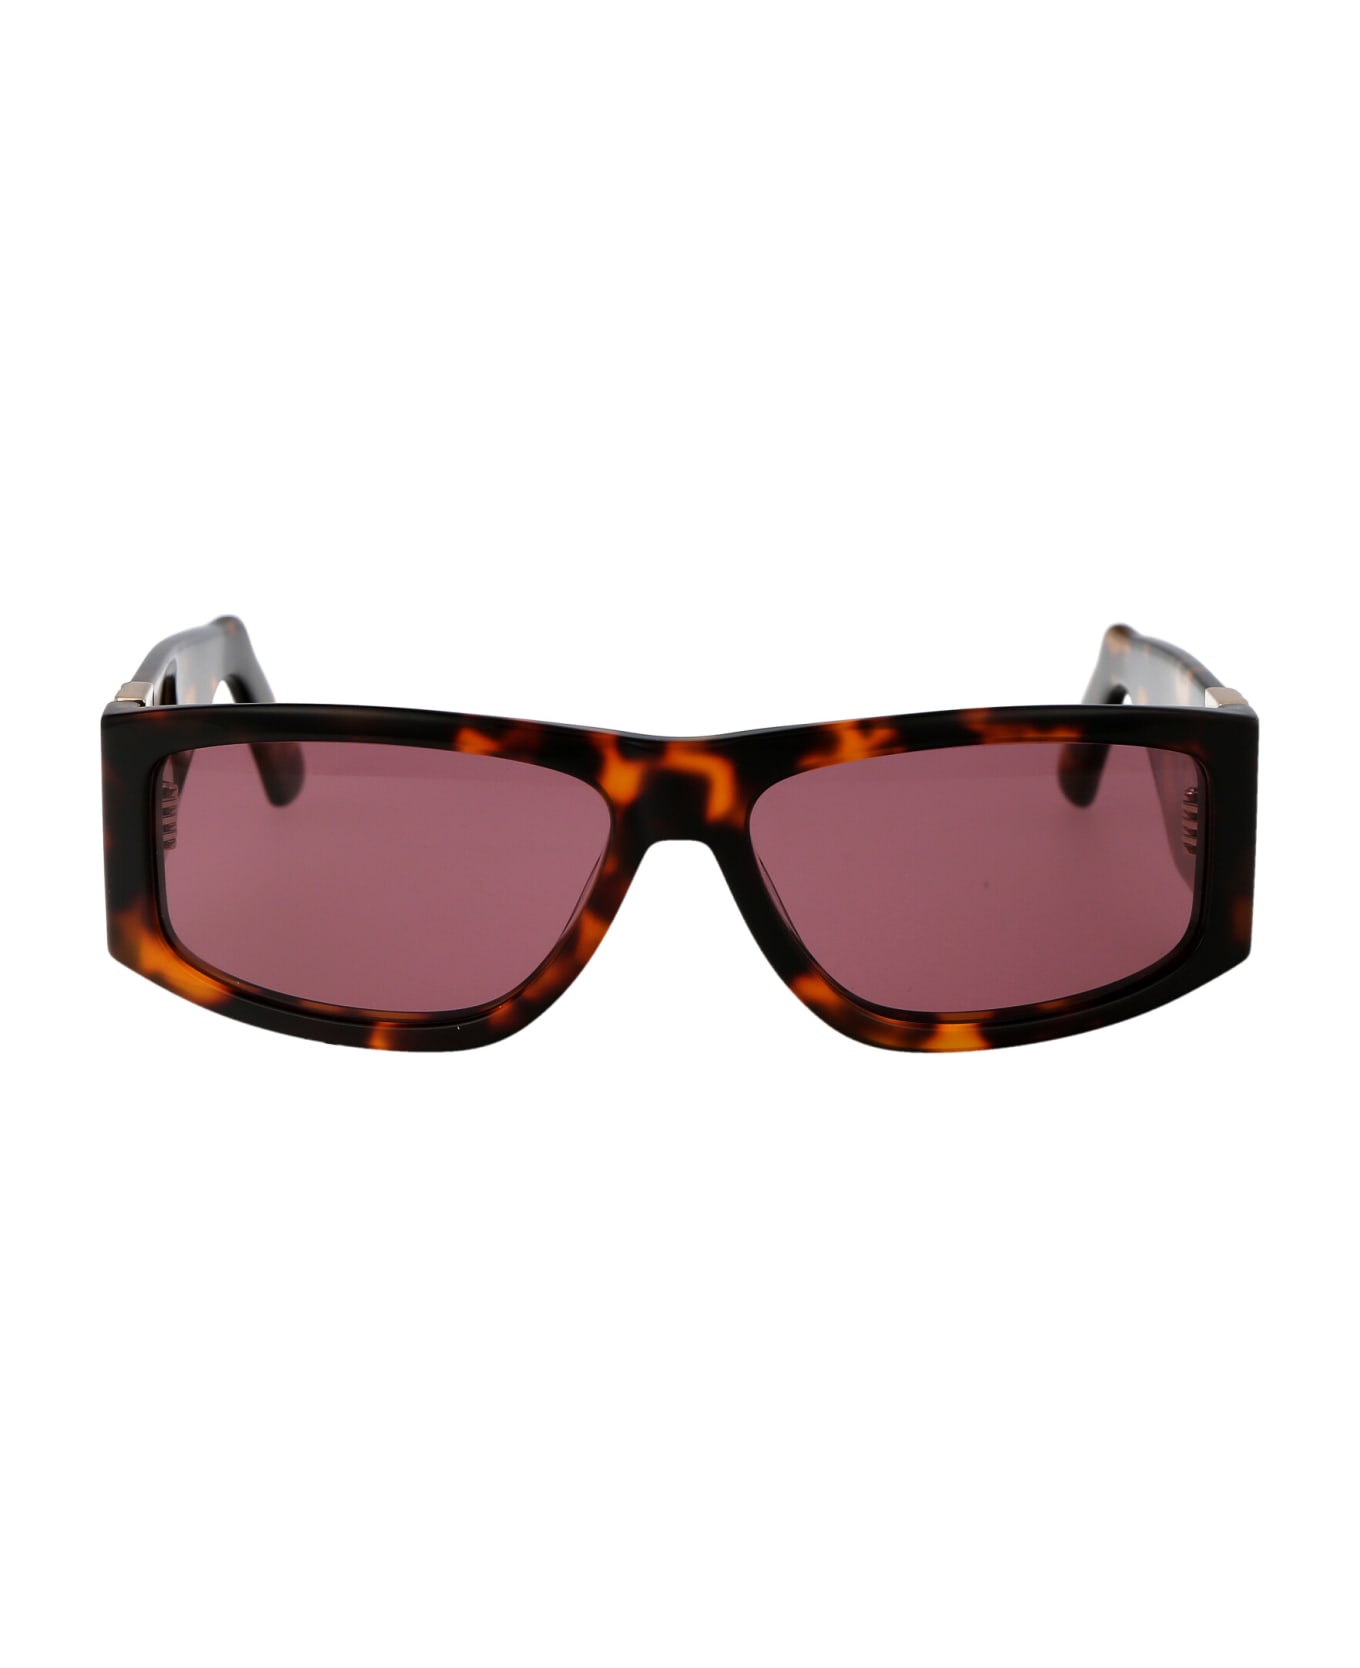 GCDS Gd0037 Sunglasses - 52S Avana Scura/Bordeaux サングラス